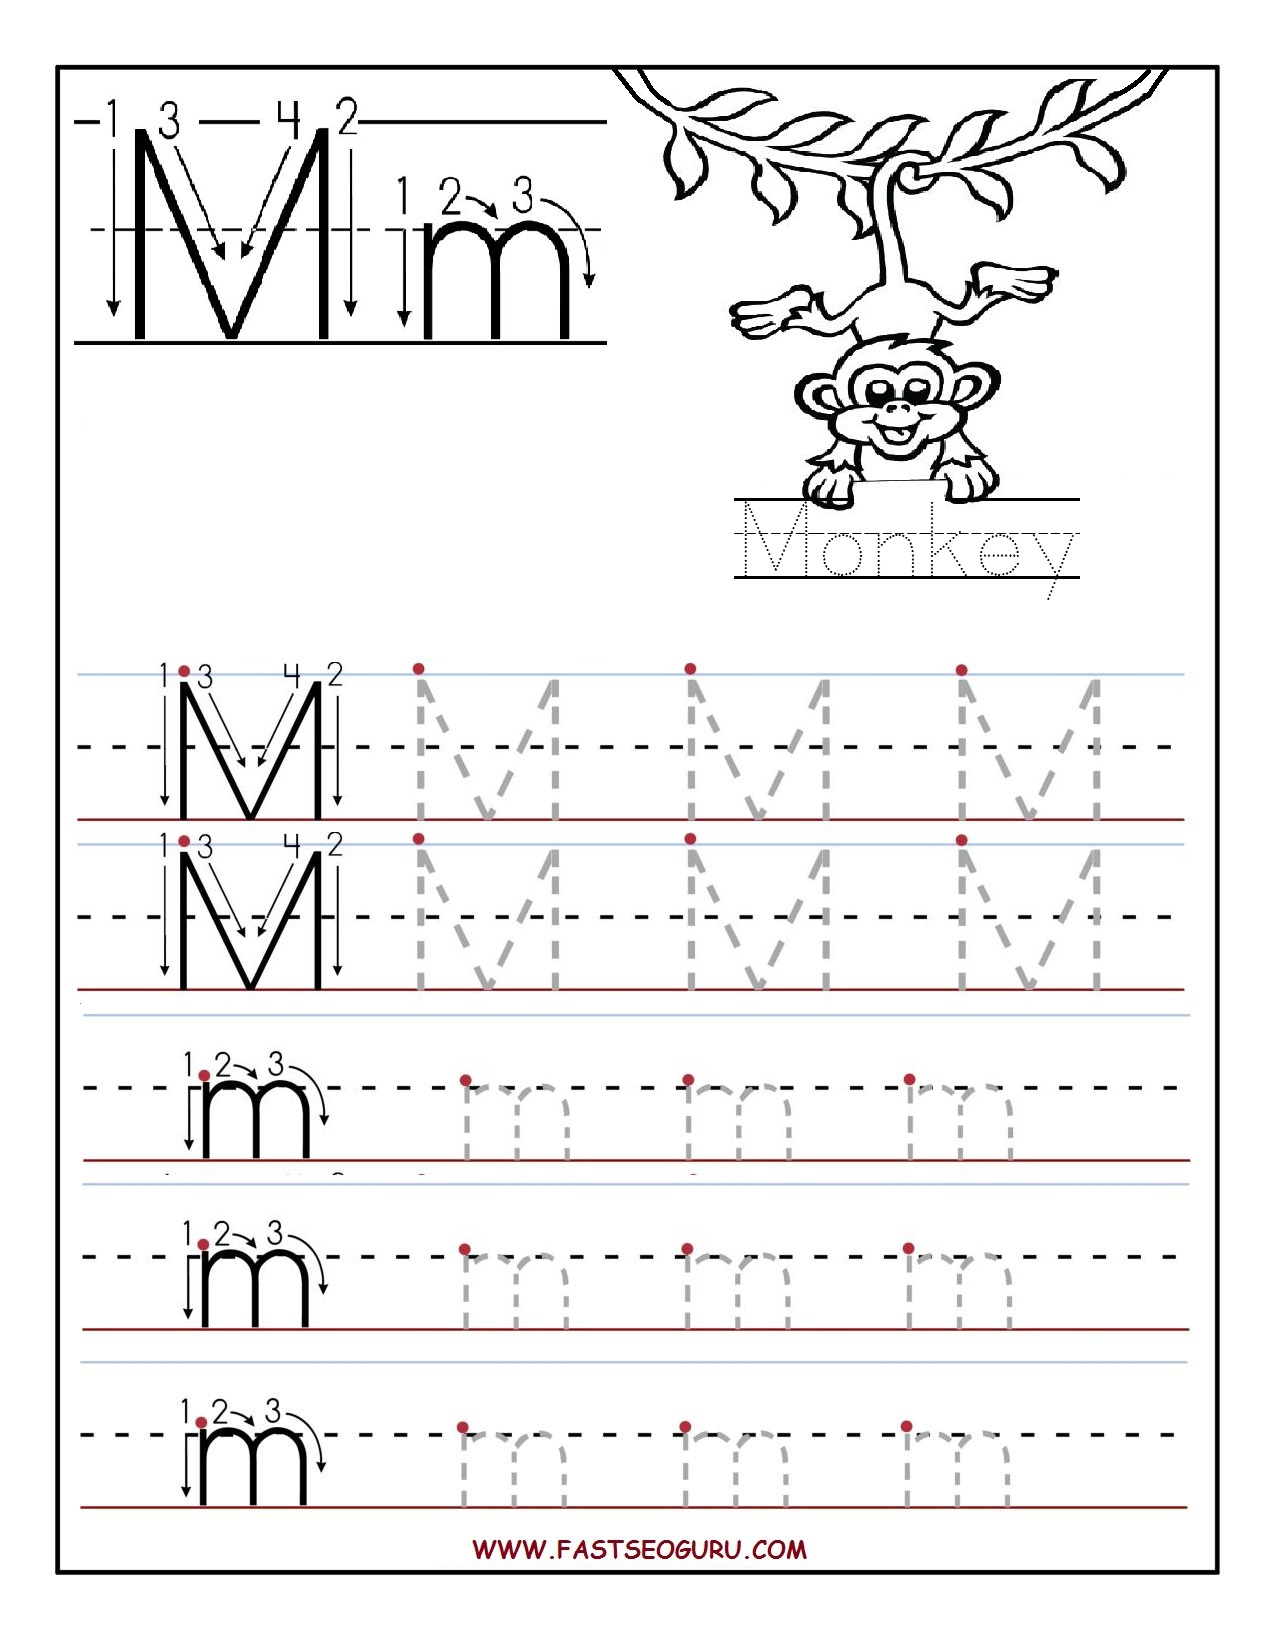 Printable Letter M Worksheets For Preschool